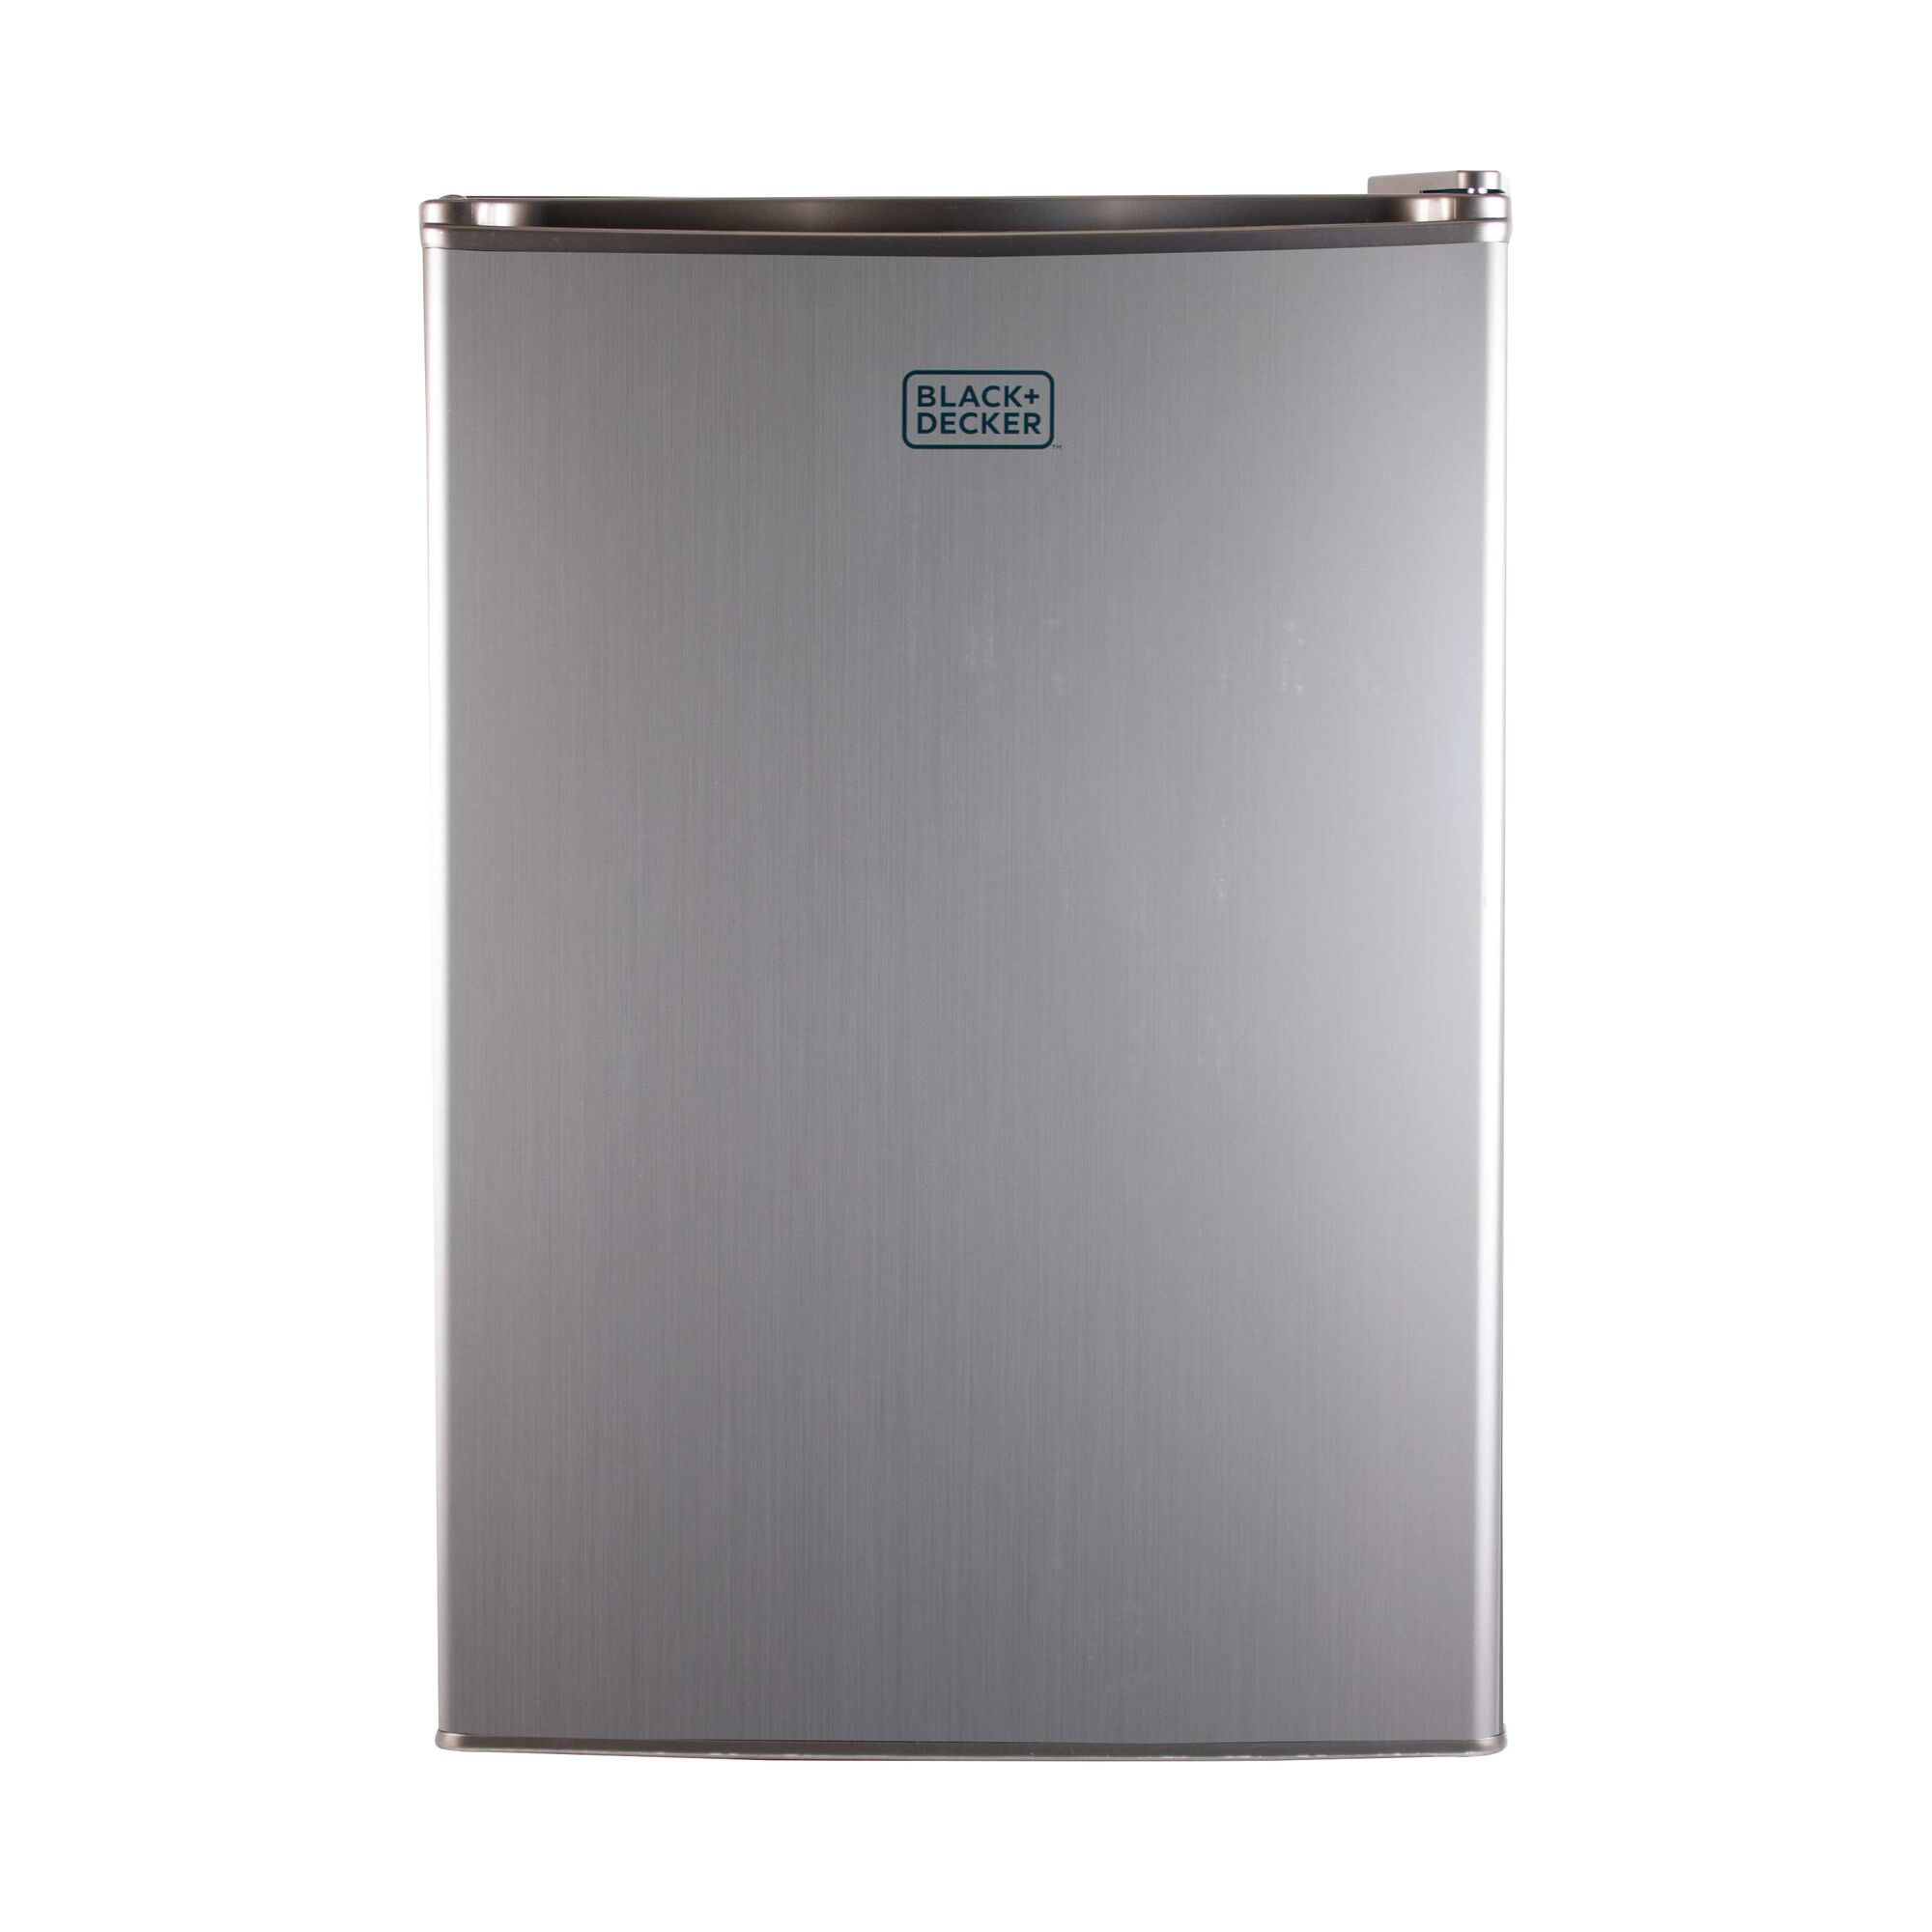 Energy star refrigerator with freezer.